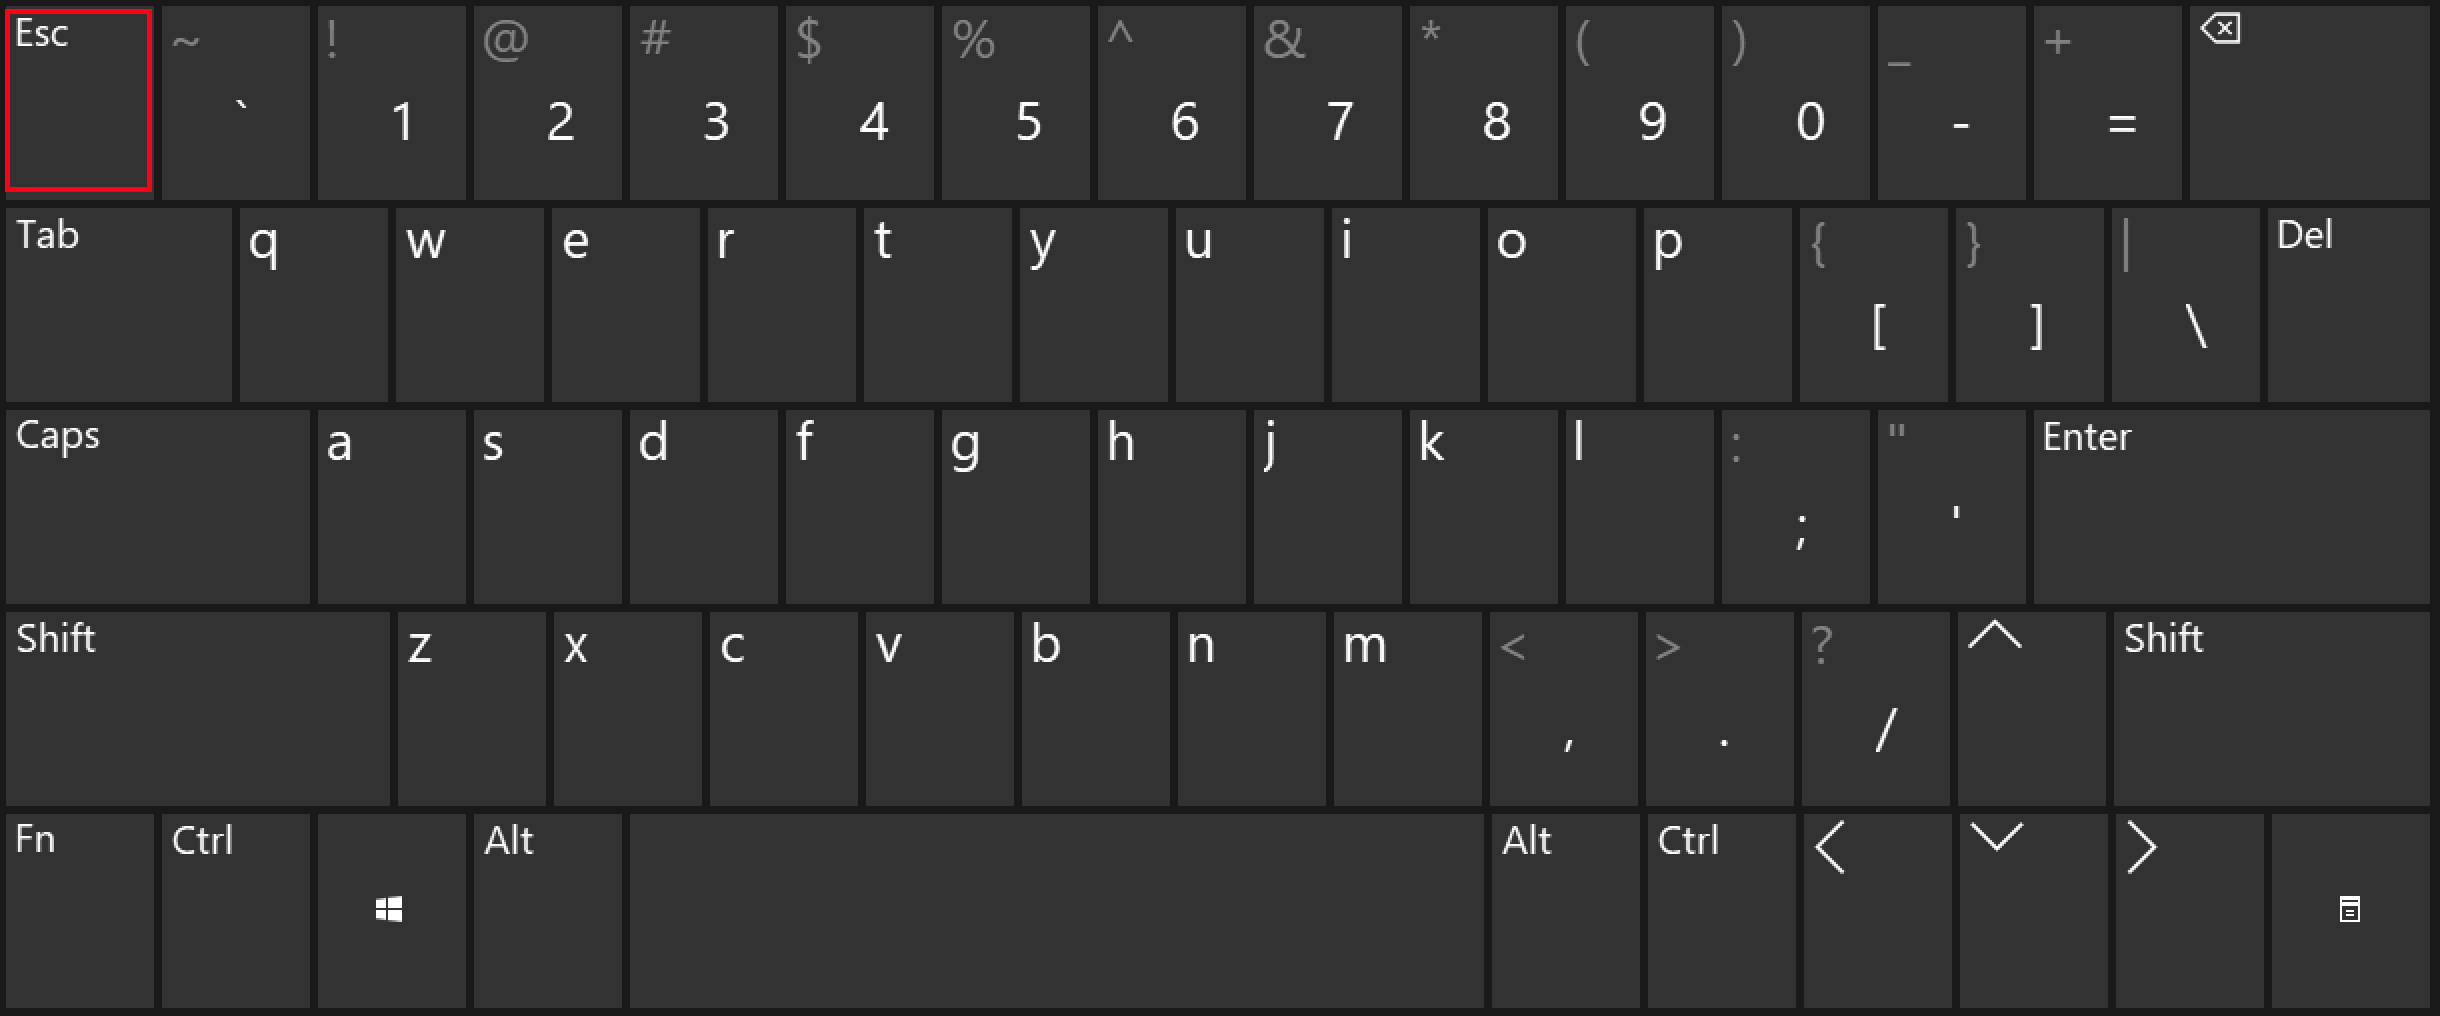 The Esc key on a standard Windows keyboard